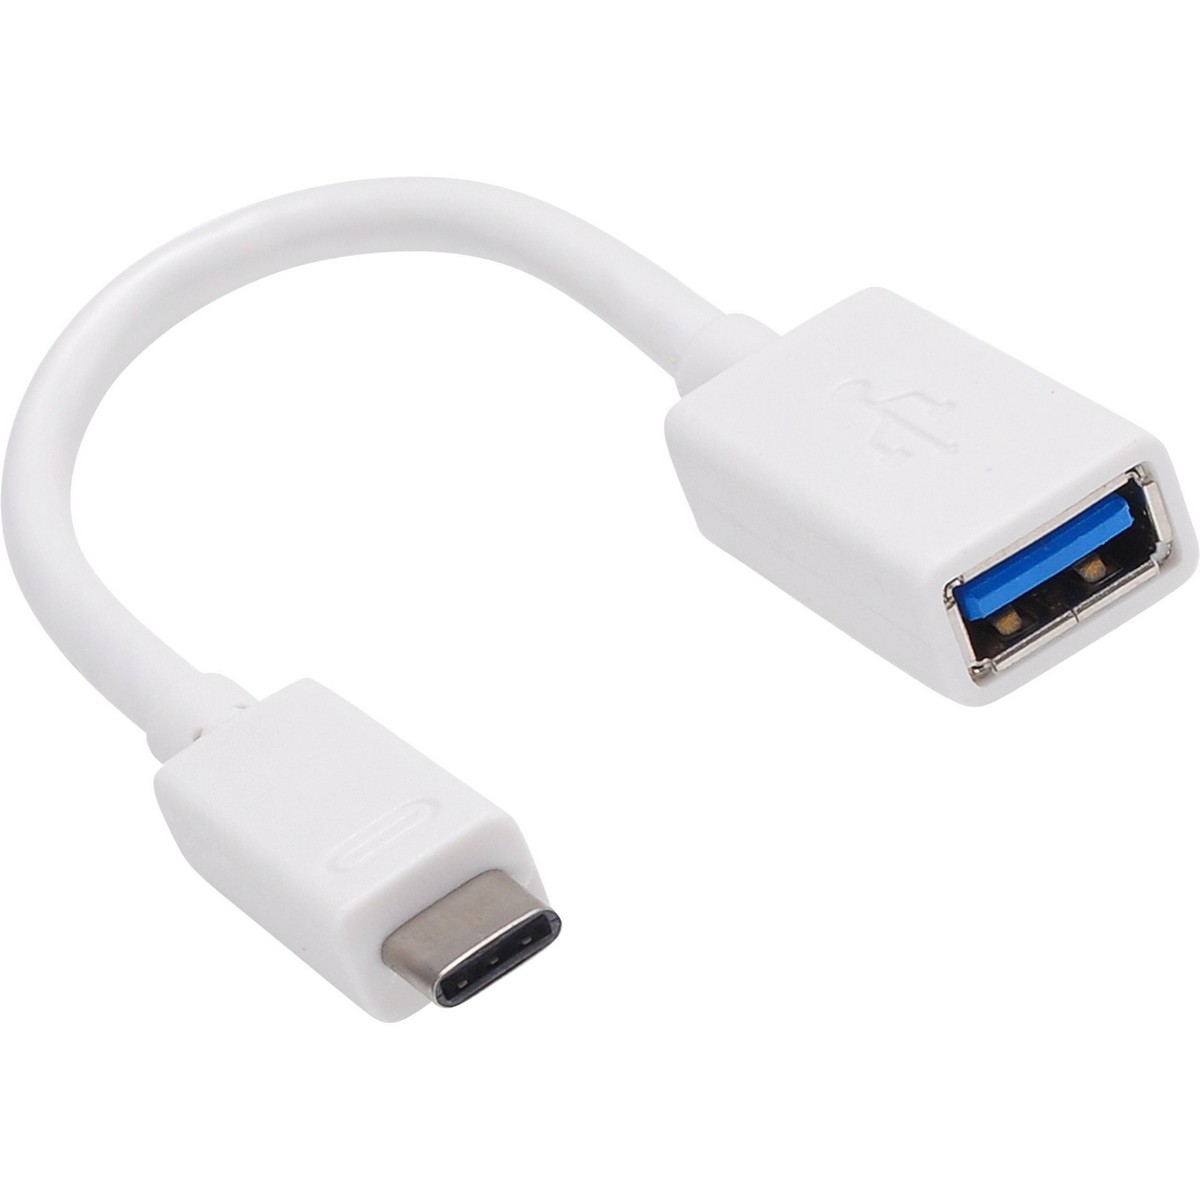 Sandberg USB 3.1 Type-C to USB 3.0 Cable